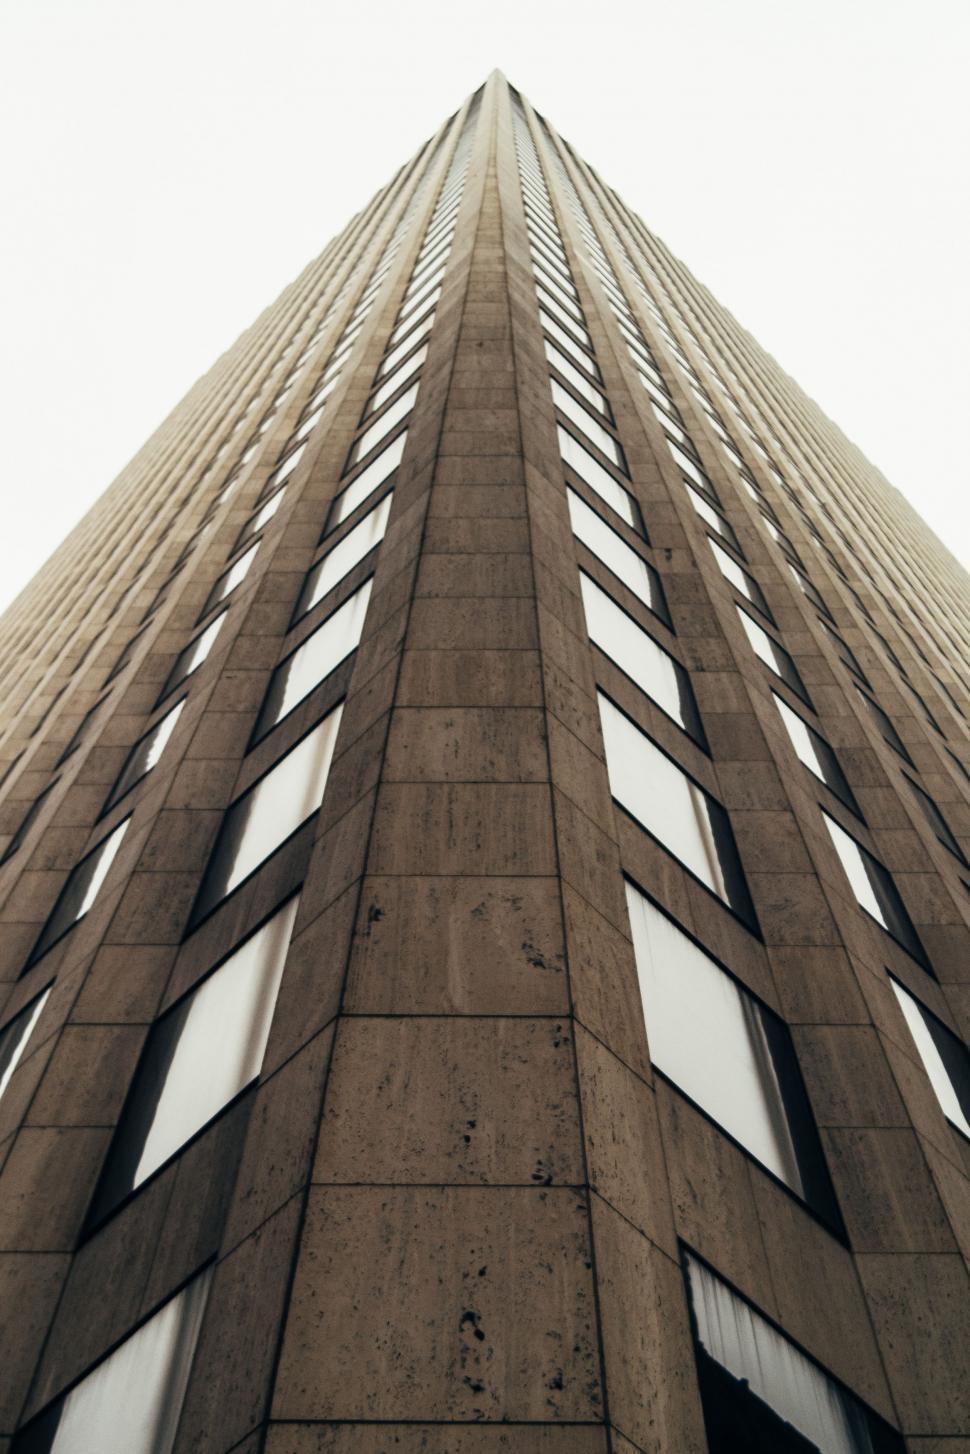 Free Image of Impressive Skyscraper With Numerous Windows 